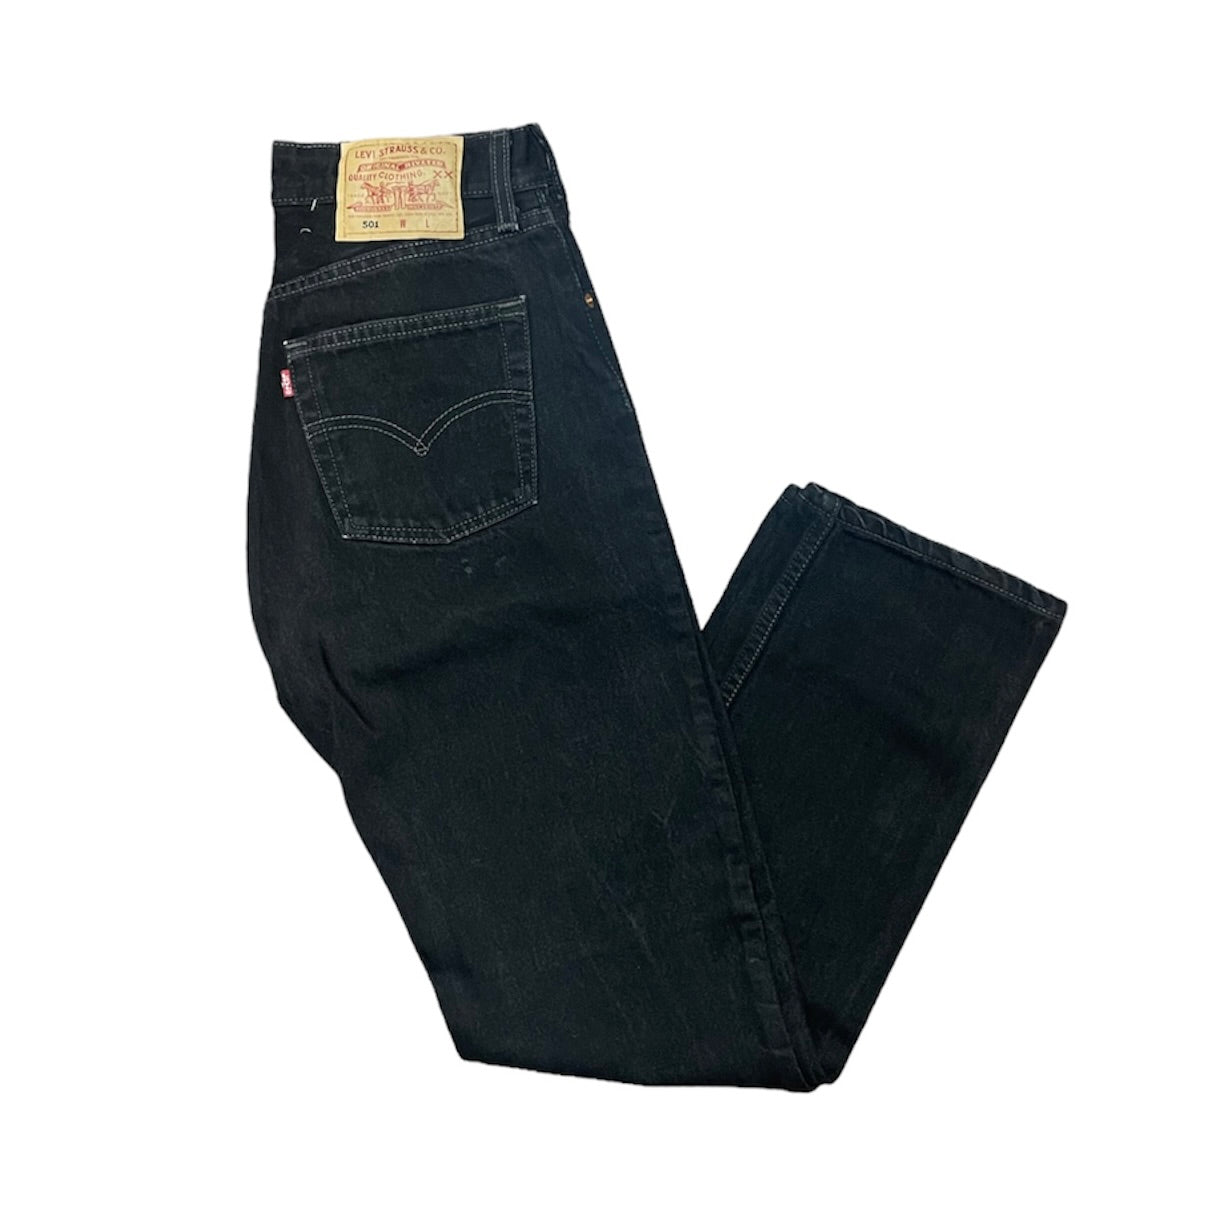 Vintage Levis 501 Black Jeans (W28/L30) (W)